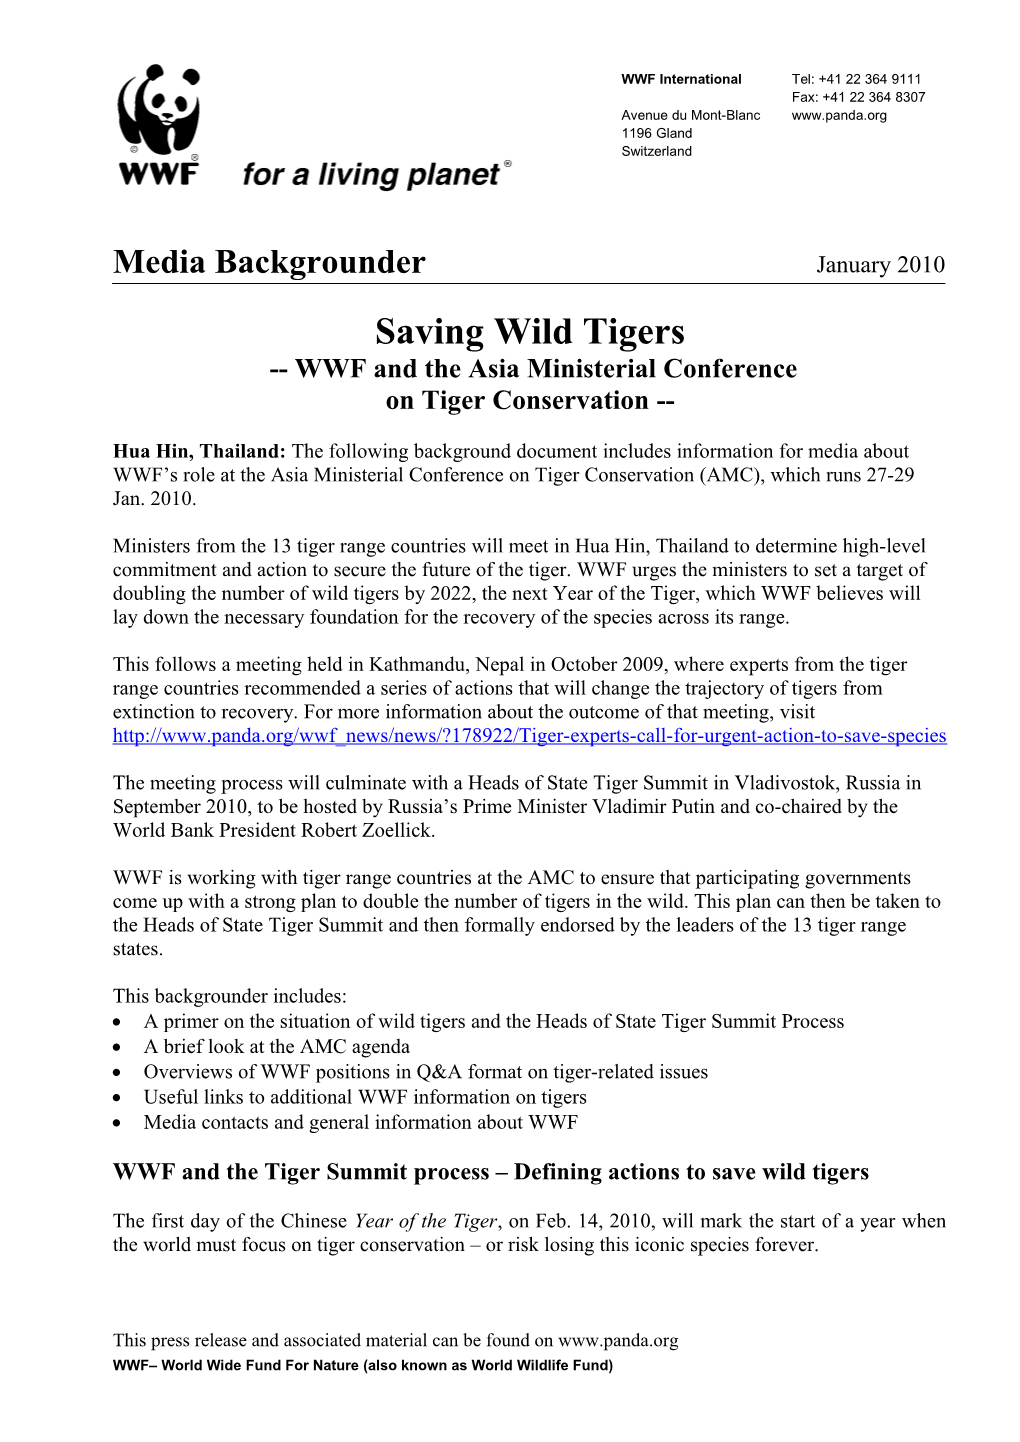 Saving Wild Tigers